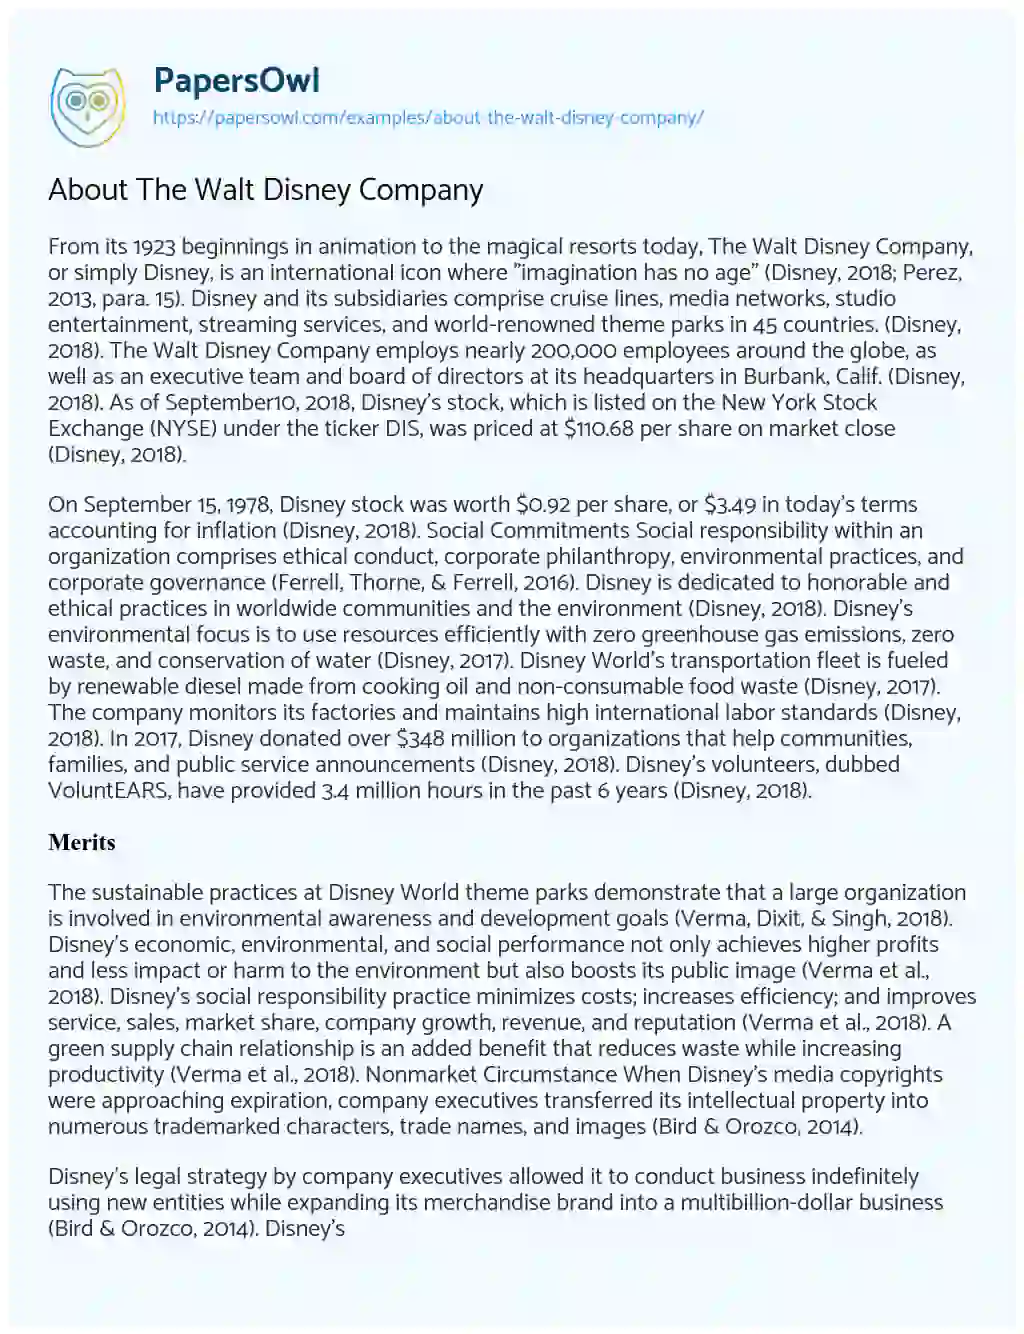 Essay on About the Walt Disney Company